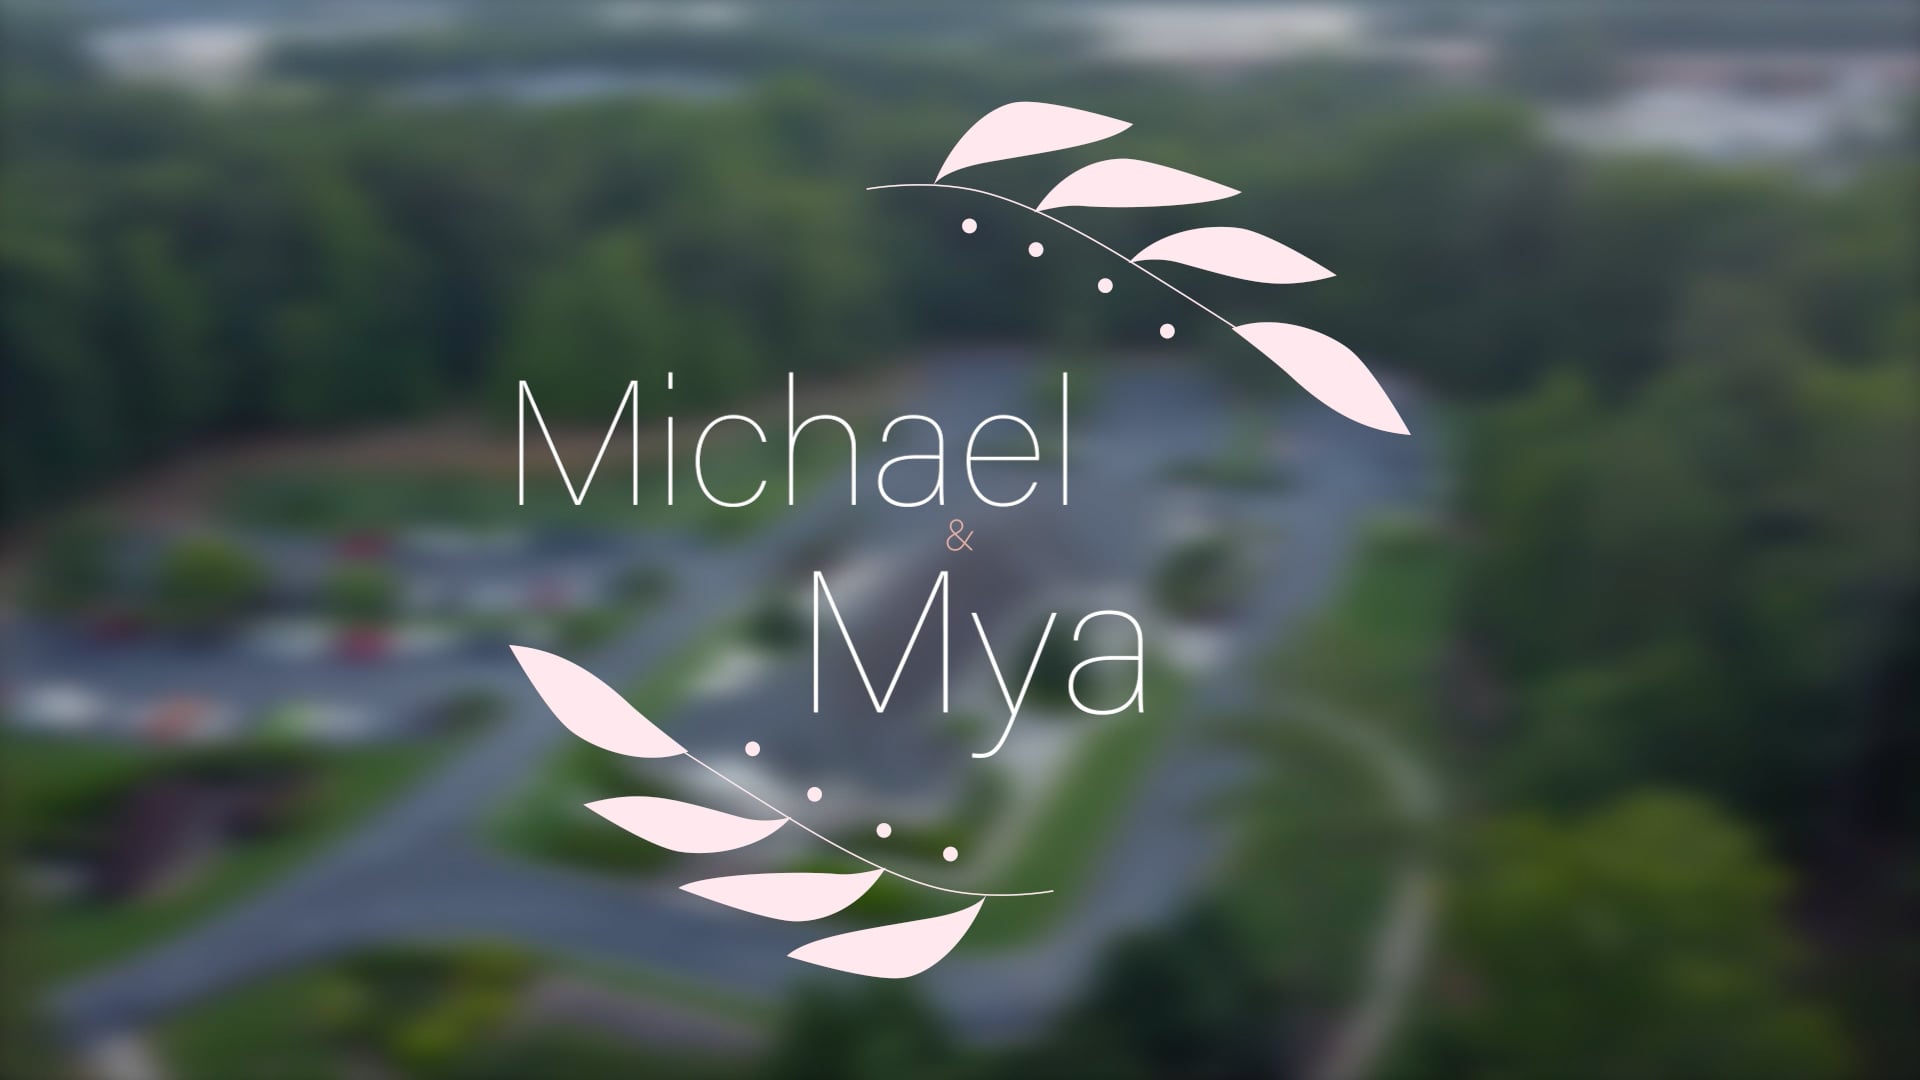 Micahel & Mya's Wedding Day (highlight video)